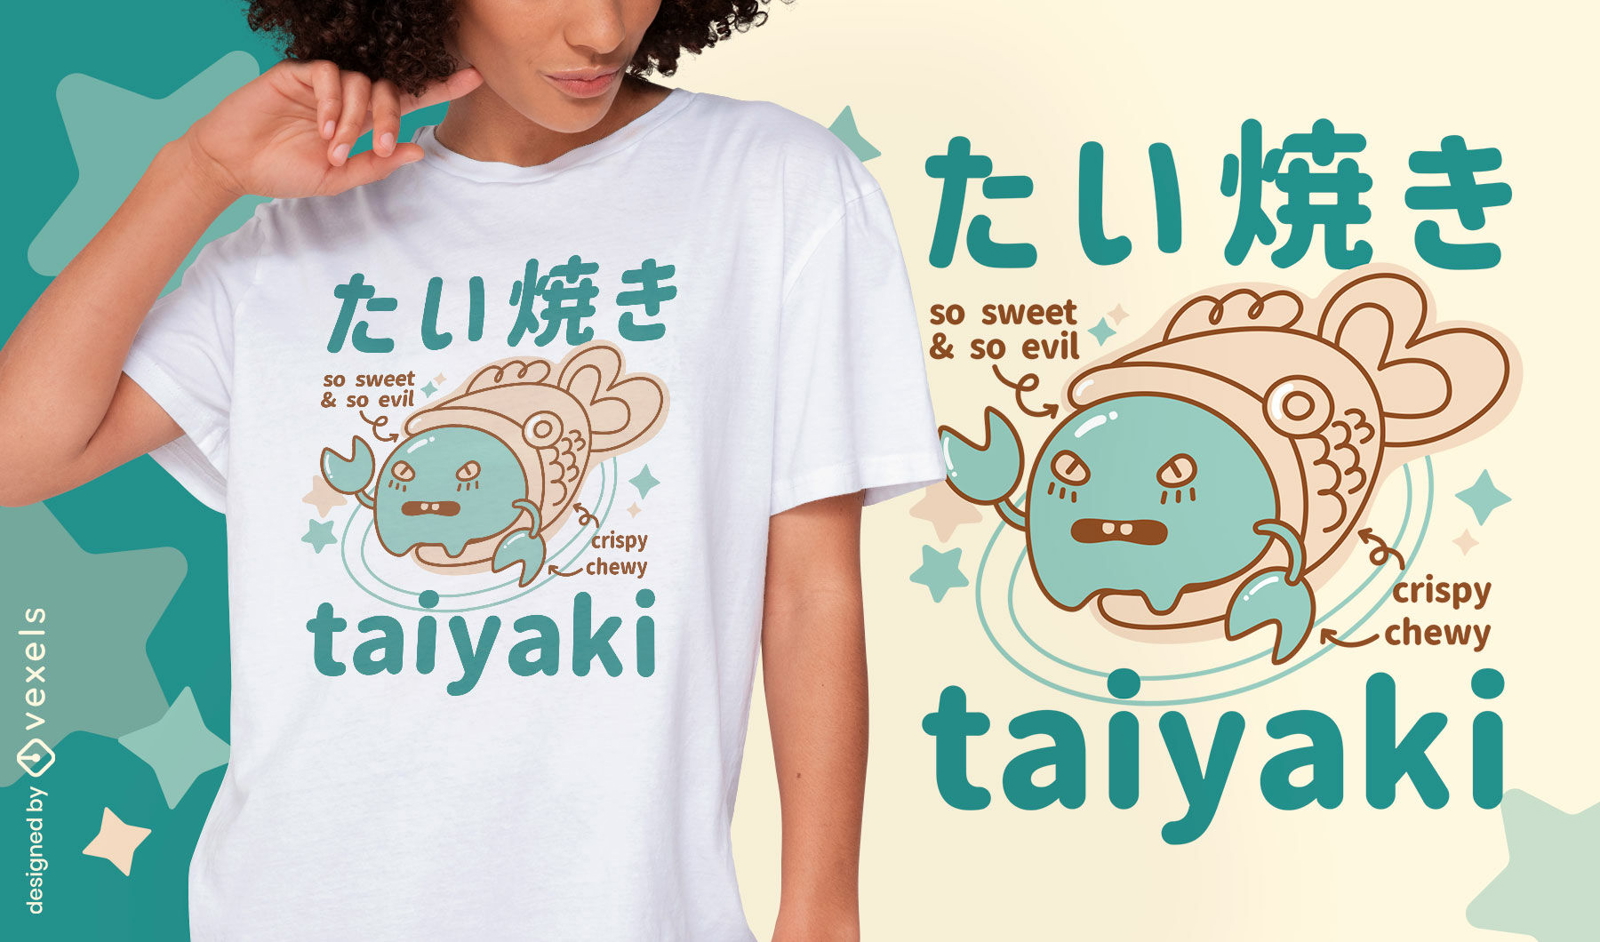 Cool taiyaki food monster t-shirt design